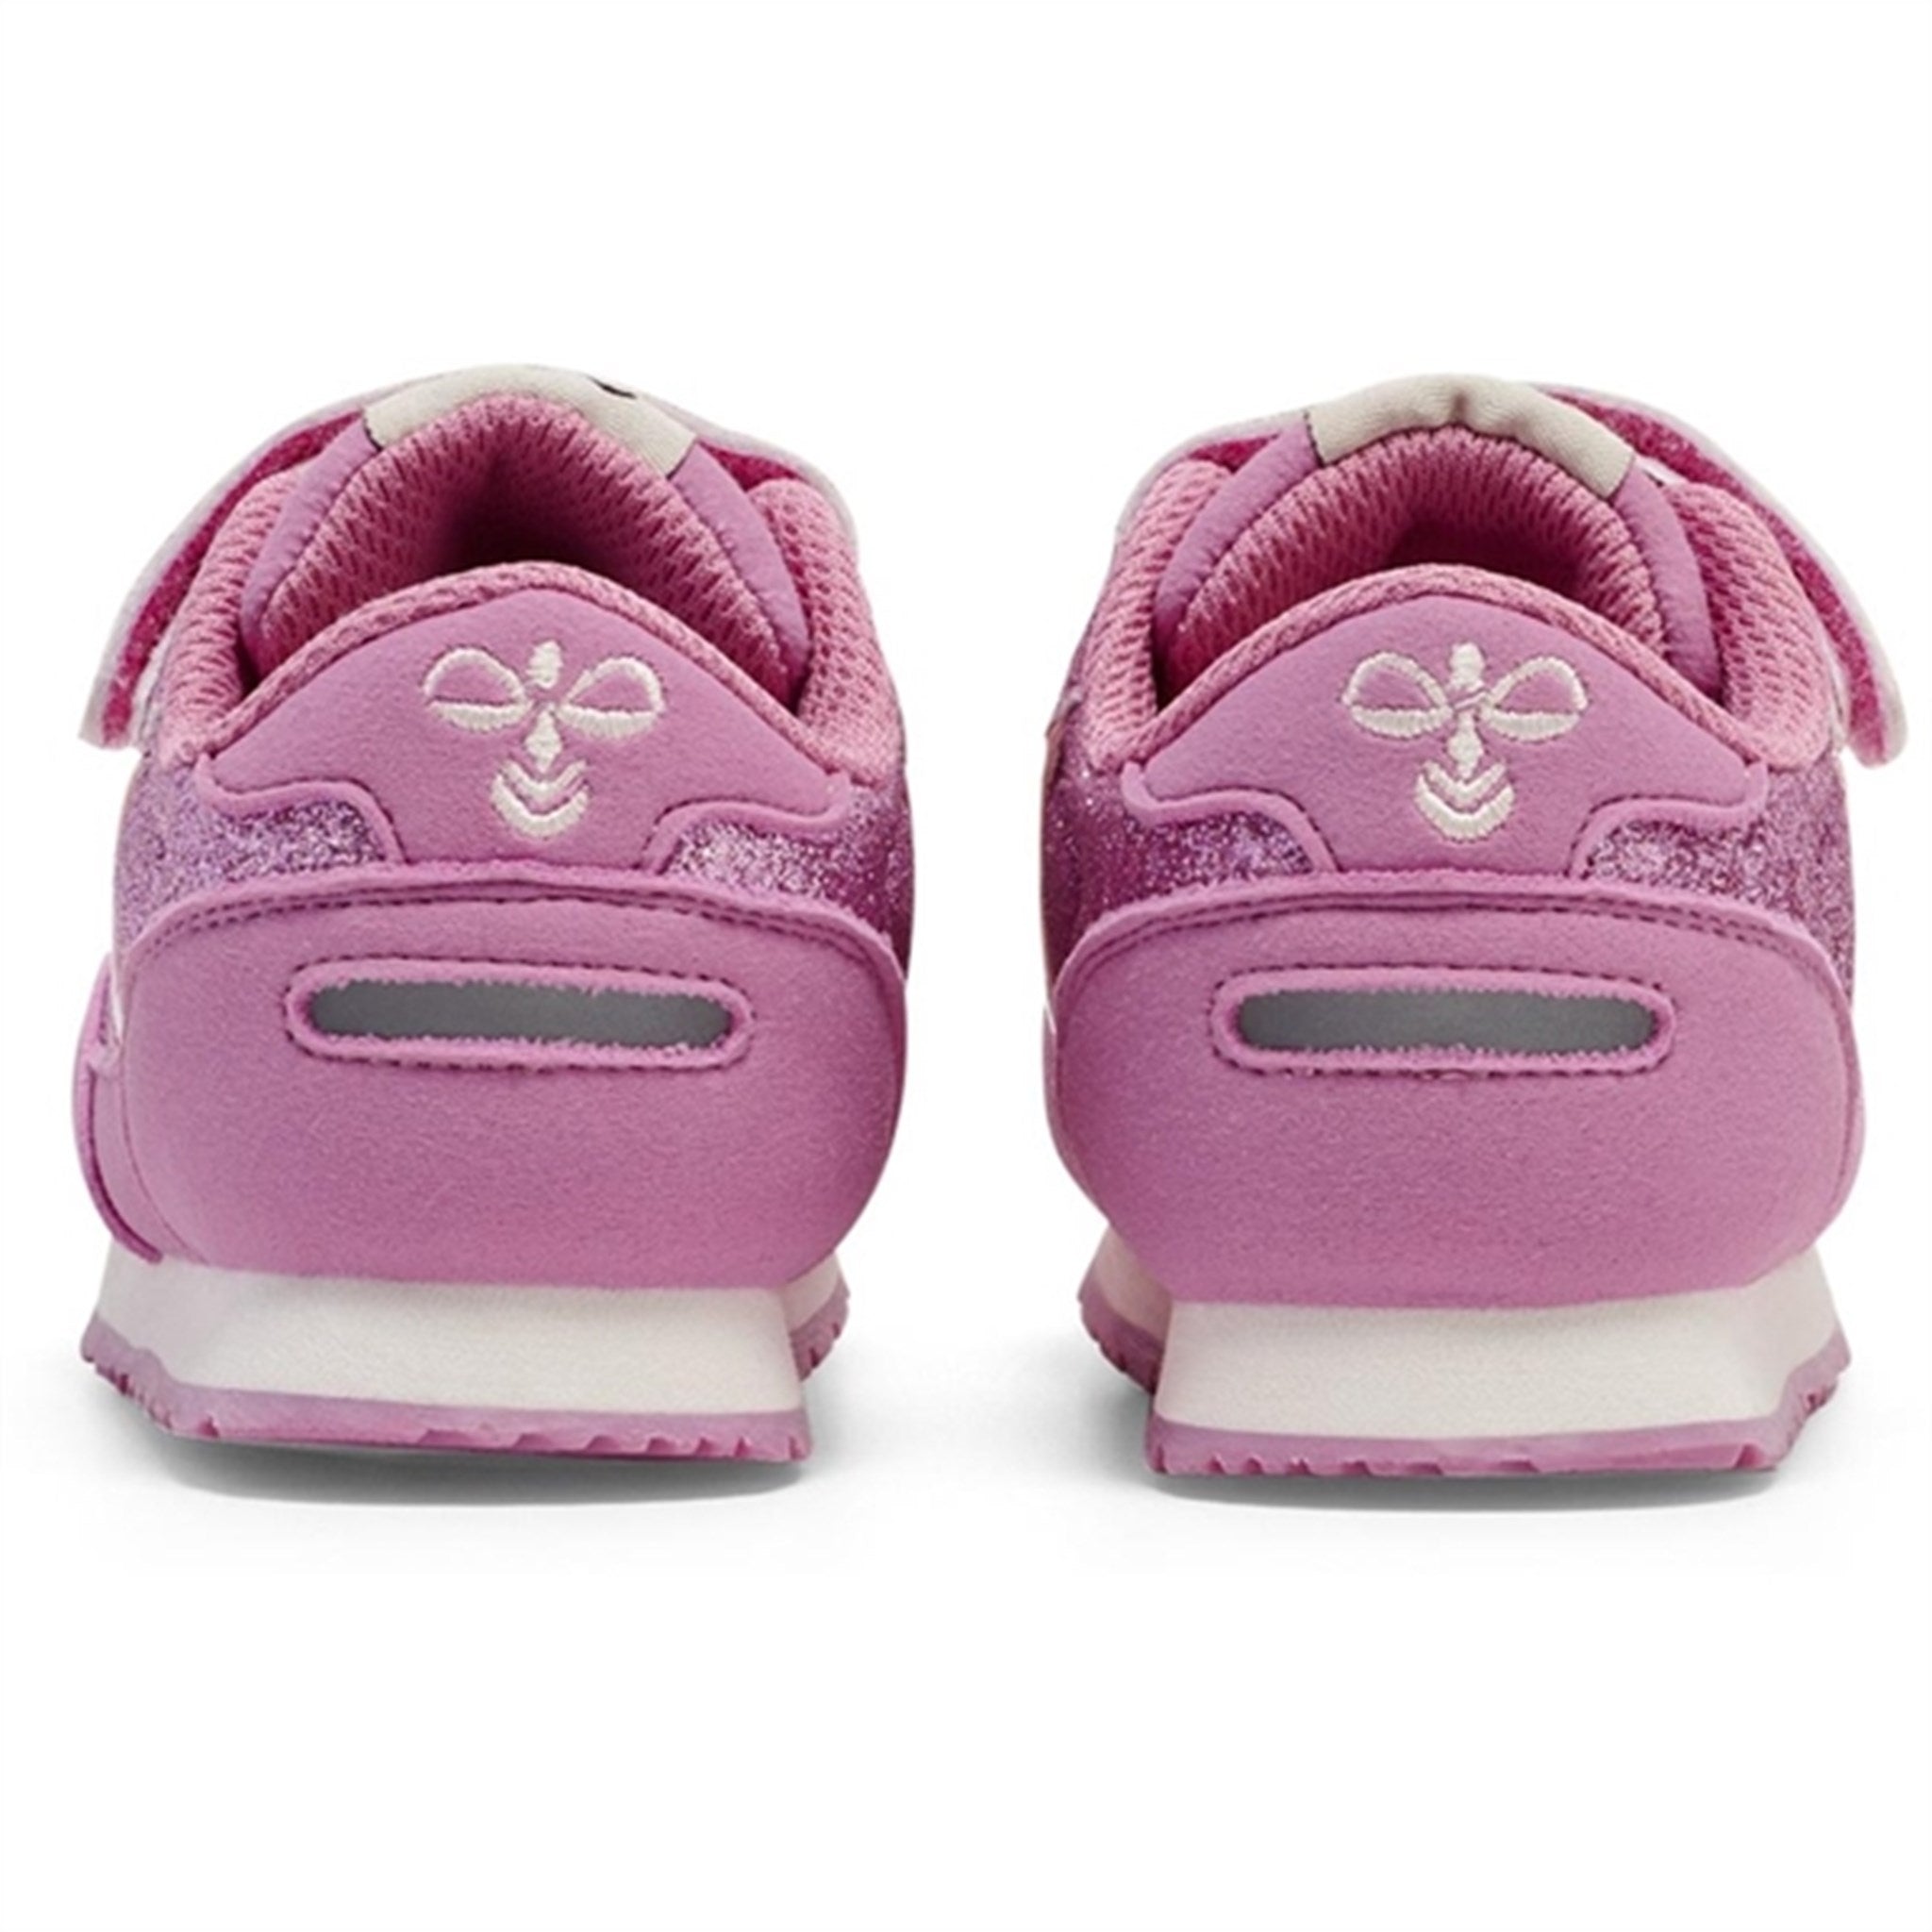 Hummel Reflex Glitter Infant Sneakers Pink 4